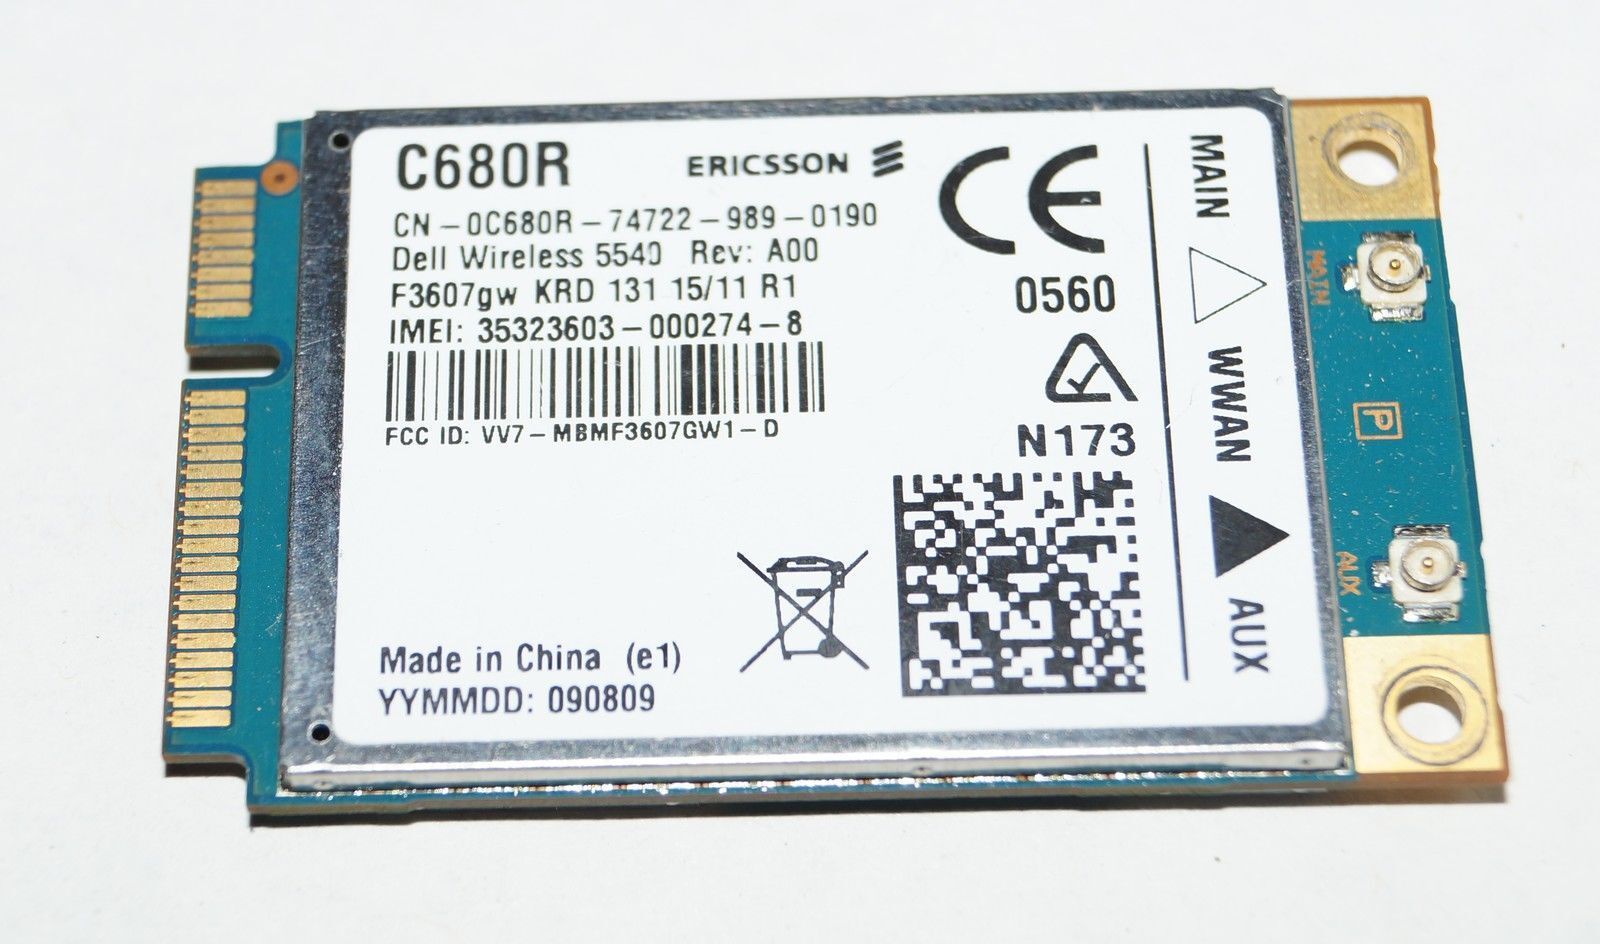 Dell C680R WWAN UMTS Wireless 5540 Ericsson F3607GW 3G HSPA GPS Mobile Broadband